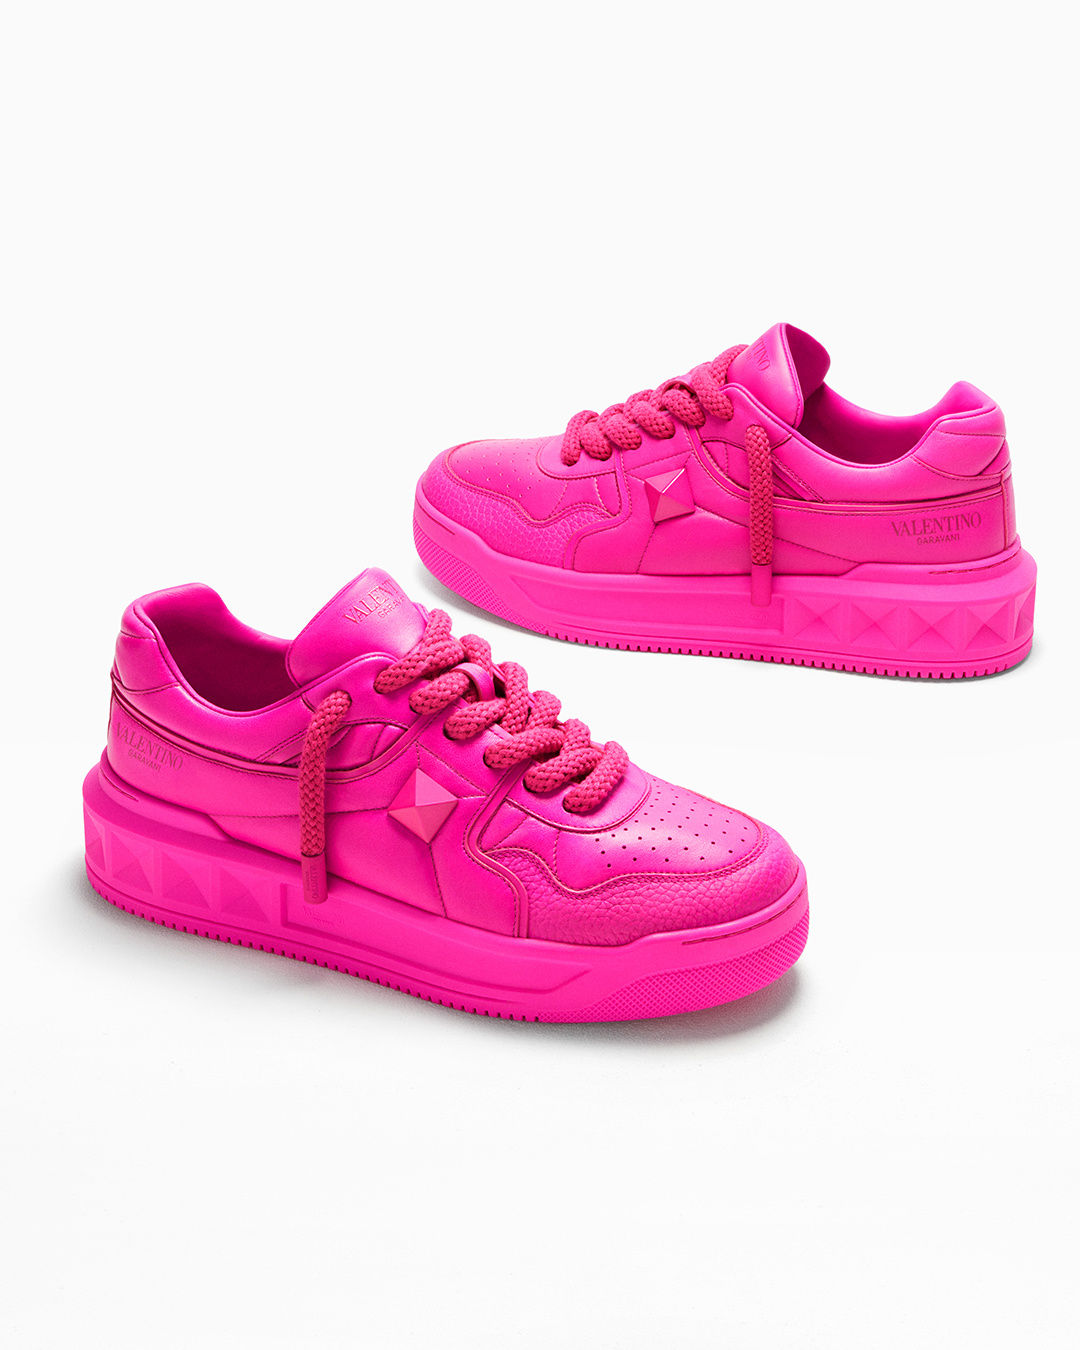 Valentino Garavani Pink PP – One Stud XL Sneakers| Valentino